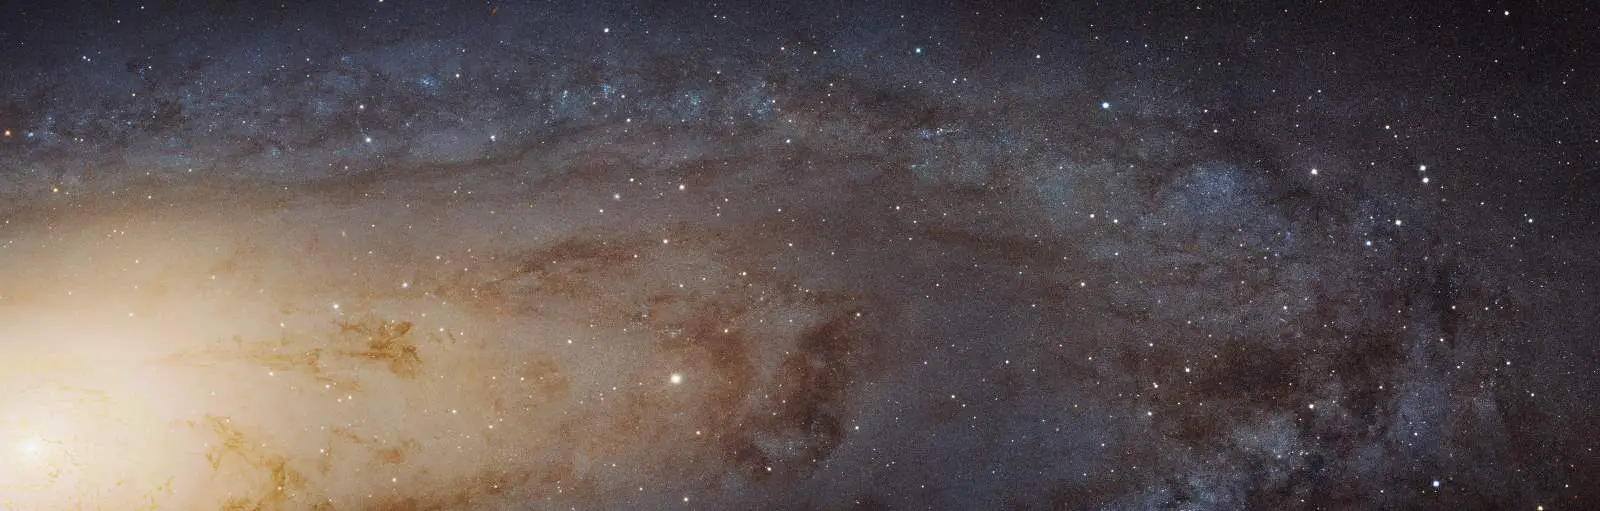 Andromeda Galaxy Hubble Image hs-2015-02-a